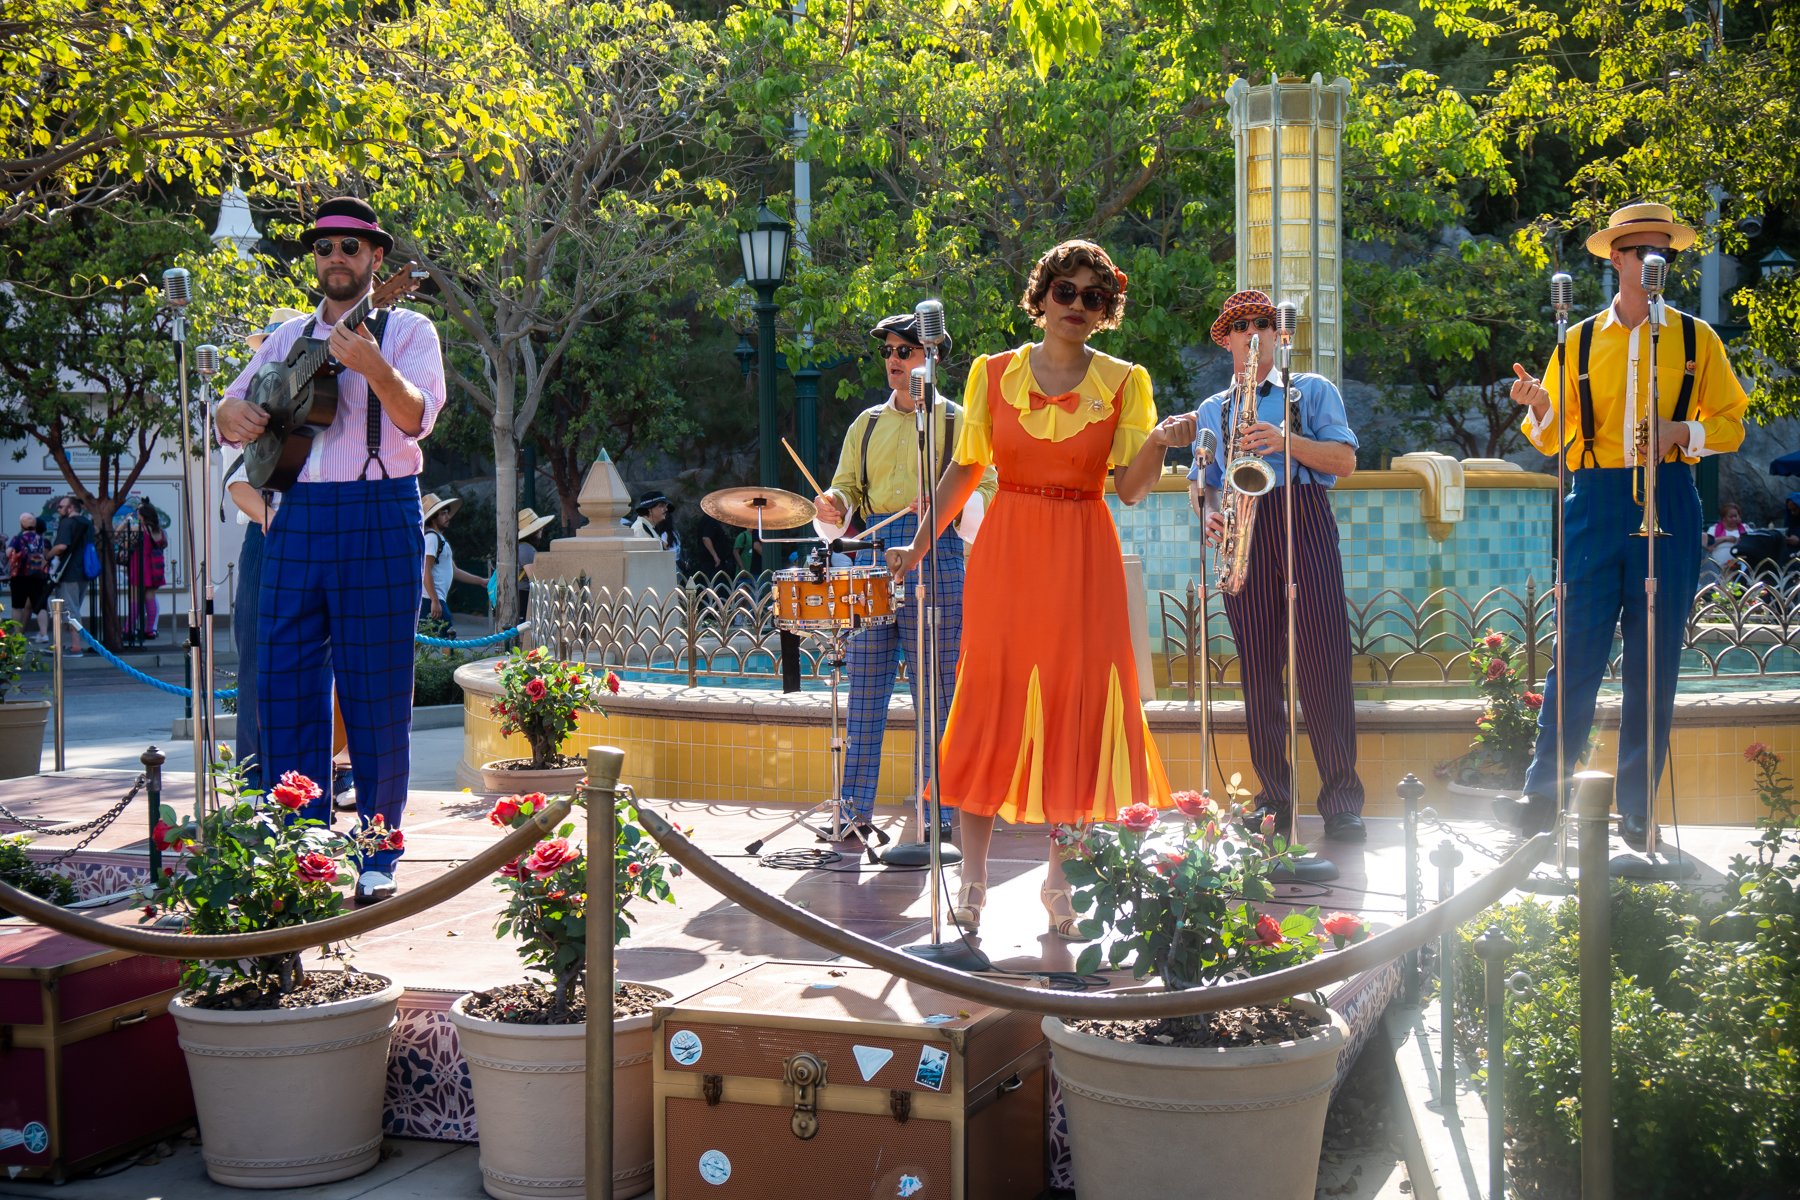 Group singing at Disneyland Halloween 2022 festivities